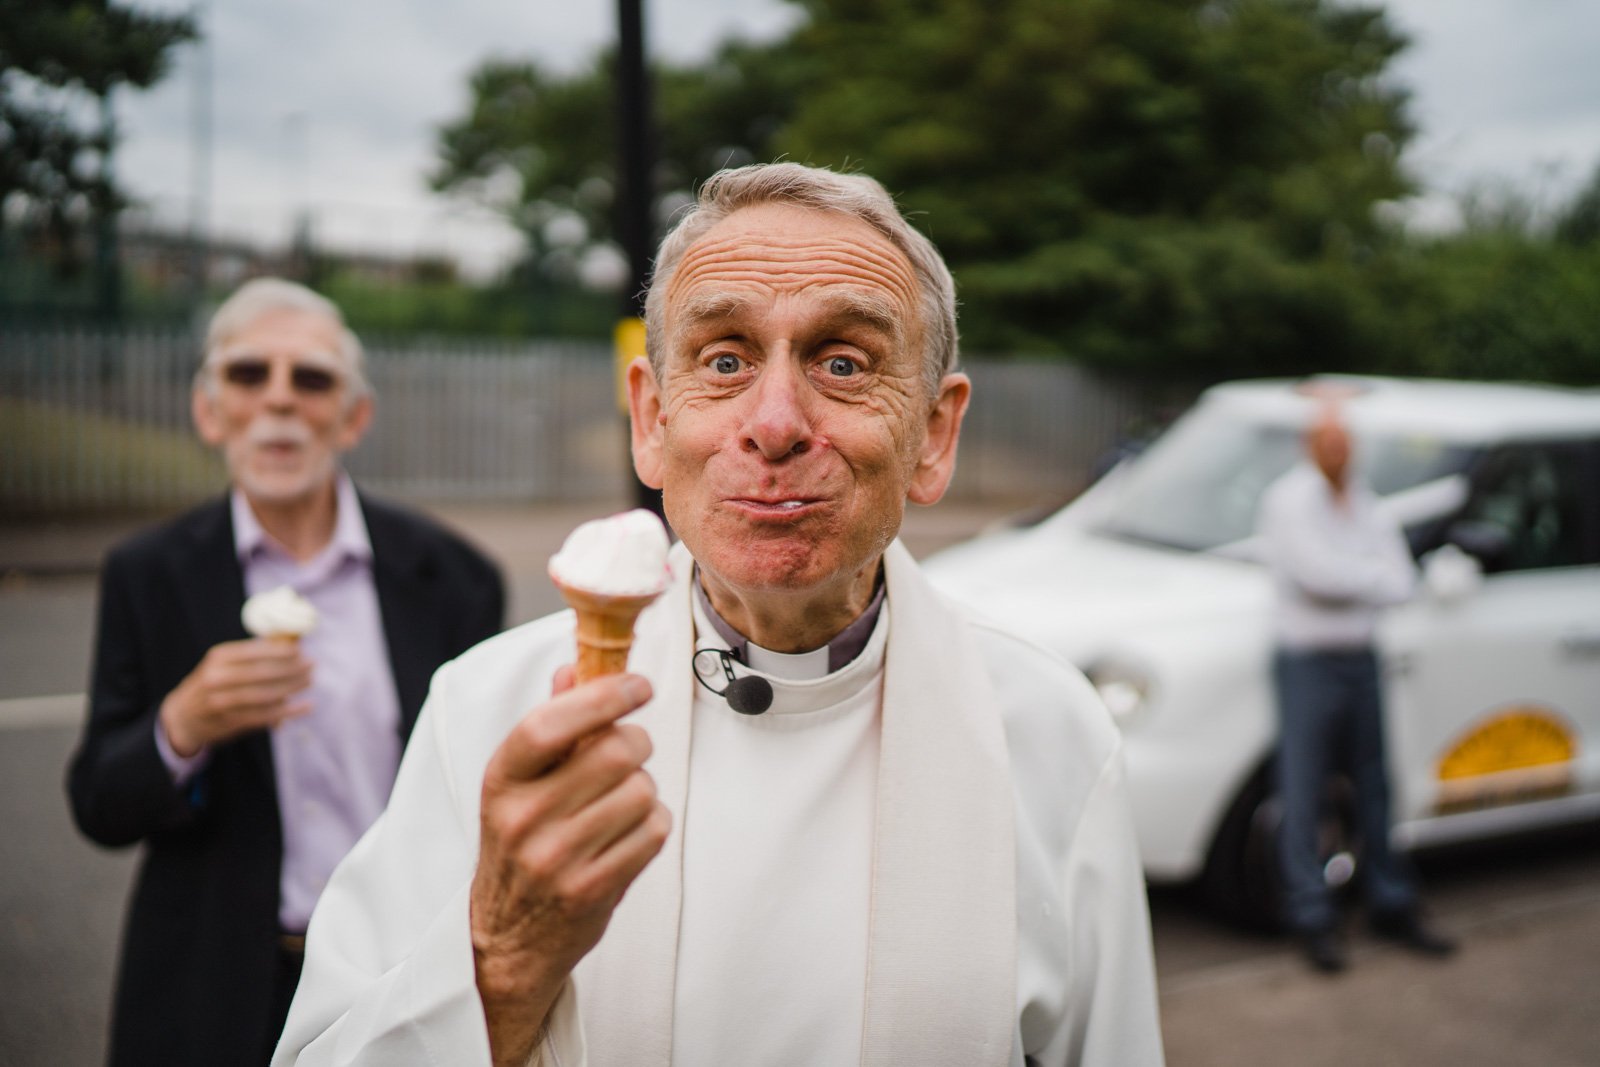 vicar witha na ice cream - 2022 wedding round up no nonsense heartfelt wedding photography leeallenphotos